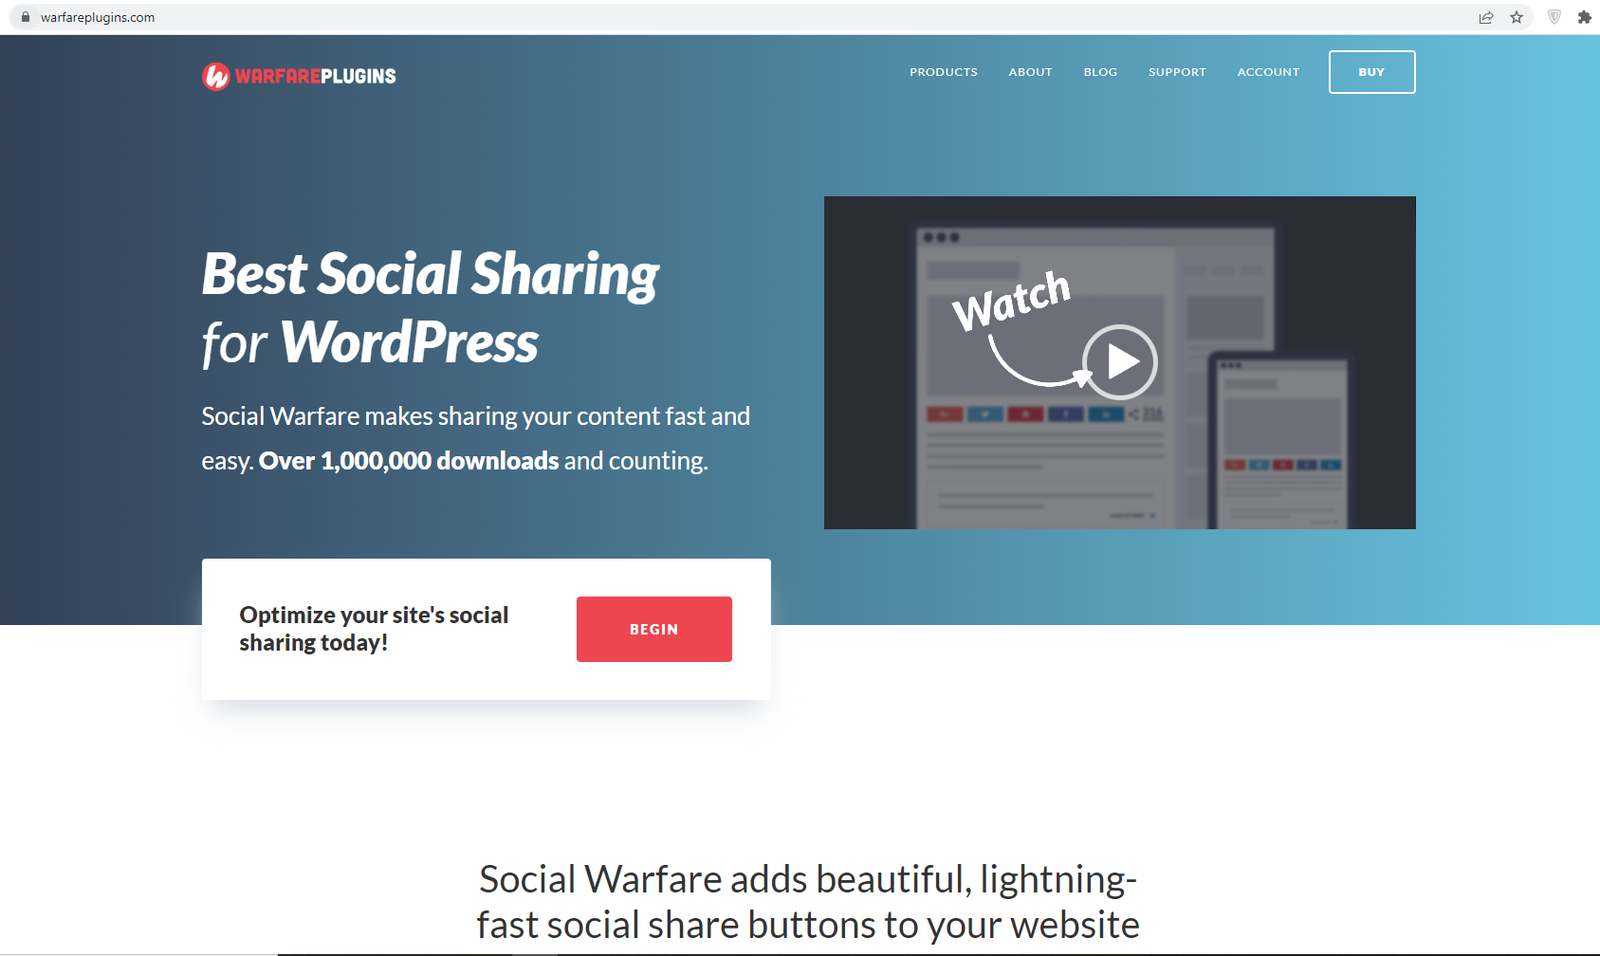 social warfare WordPress social sharing plugins